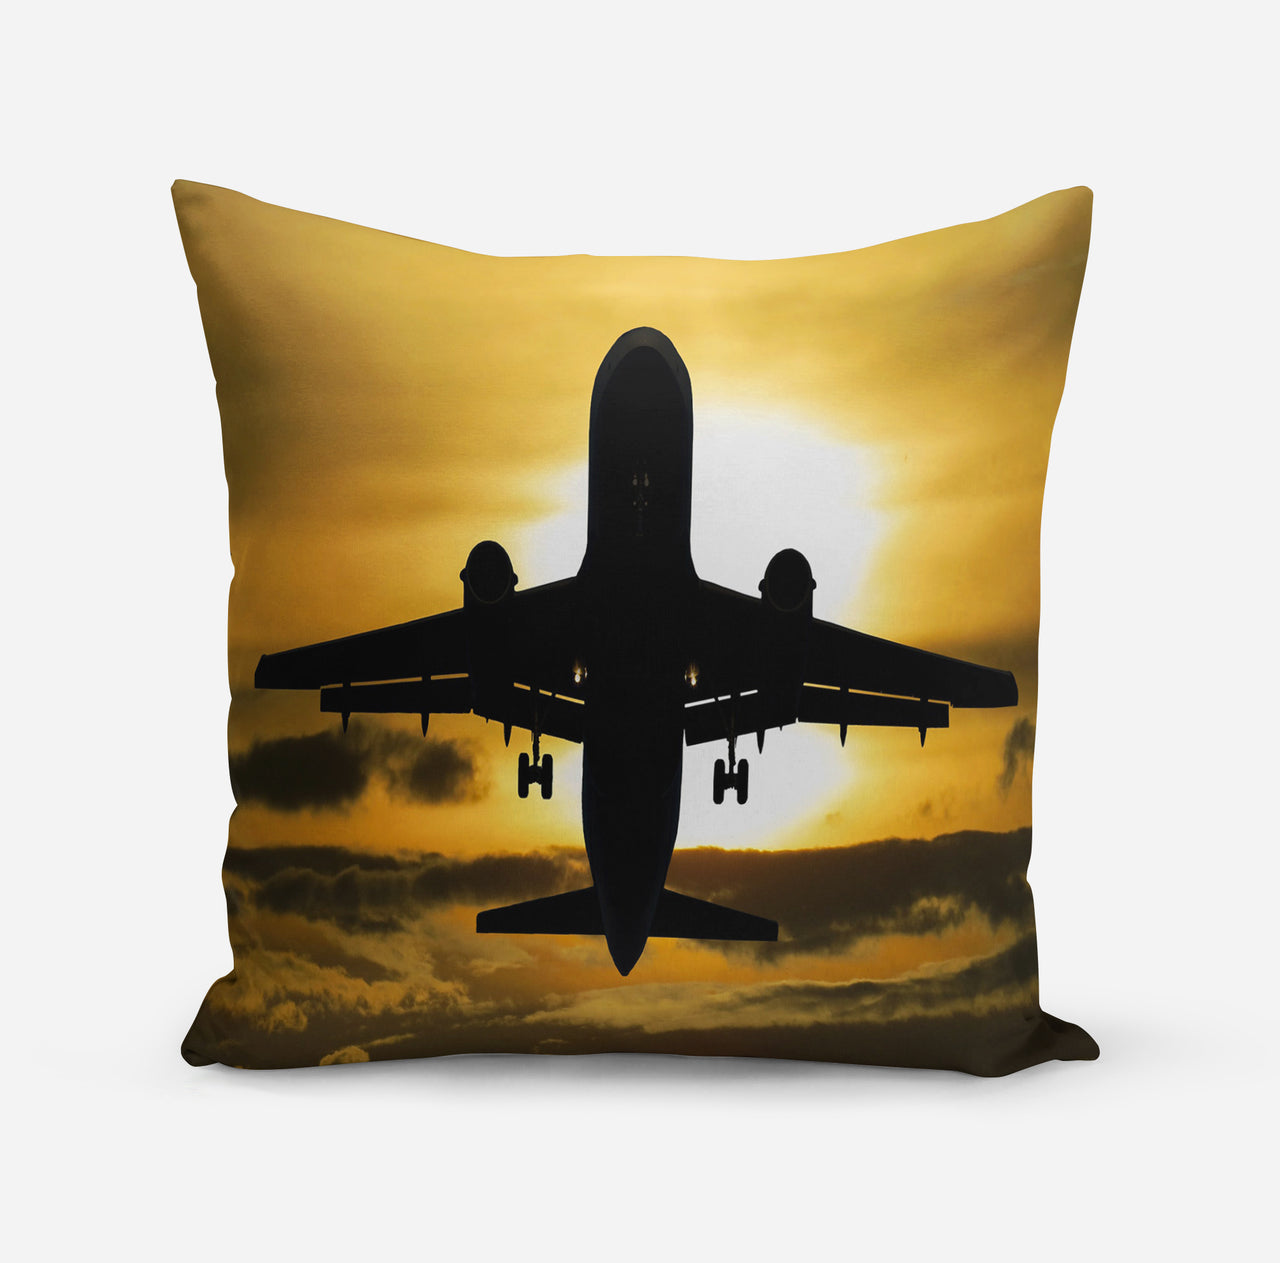 Departing Passanger Jet During Sunset Designed Pillows